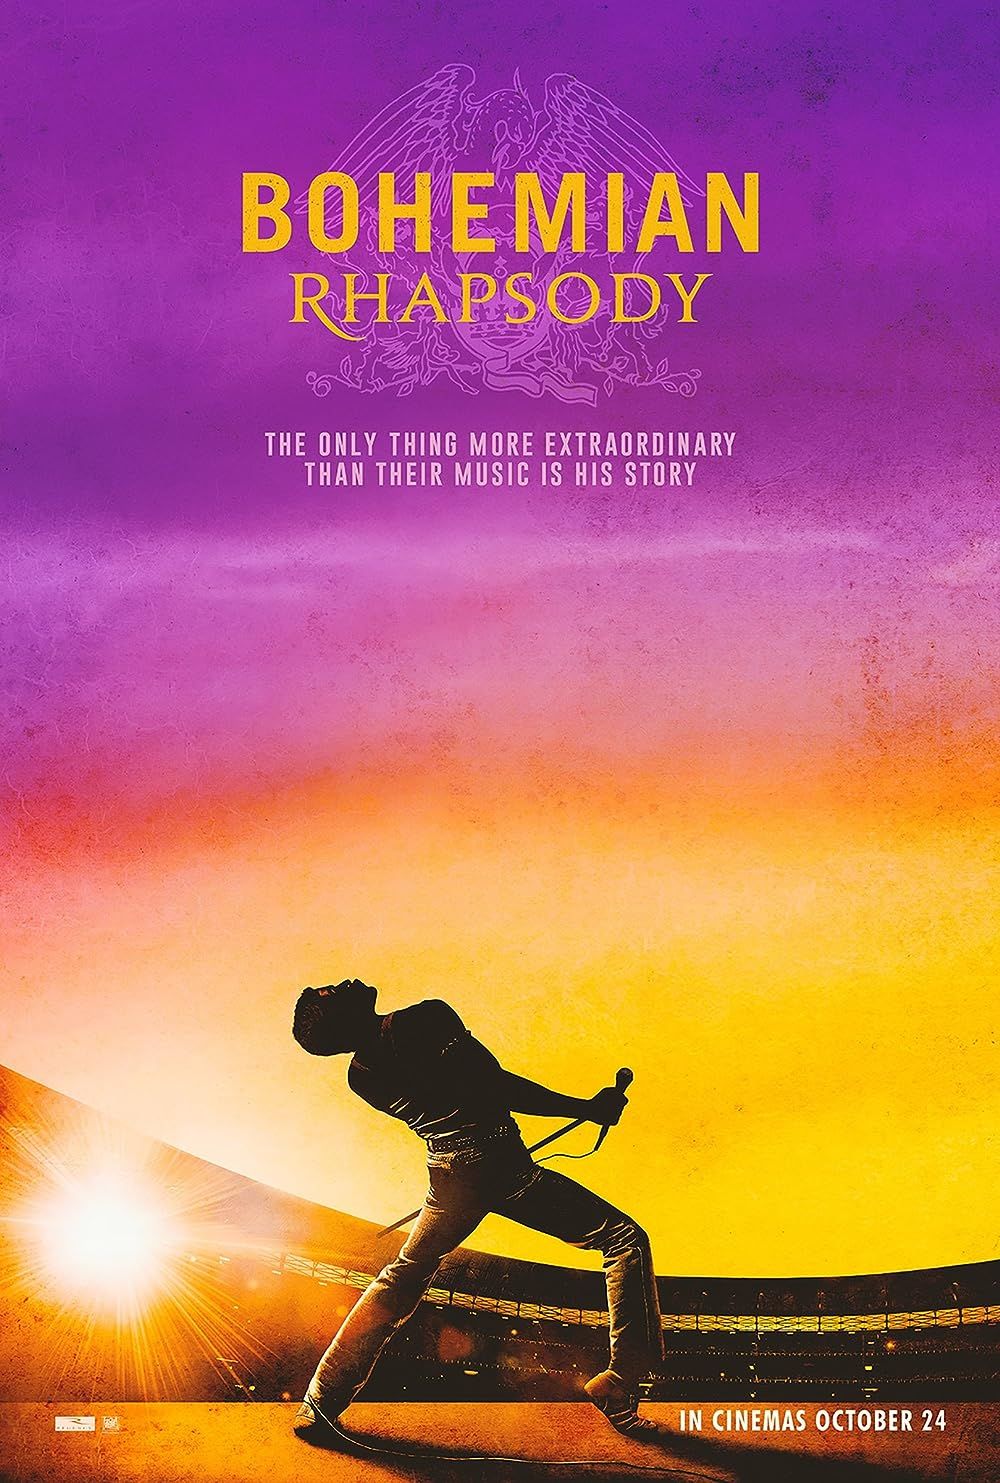 Rami Malek as Freddie Mercury sings on the poster for Bohemian Rhapsody